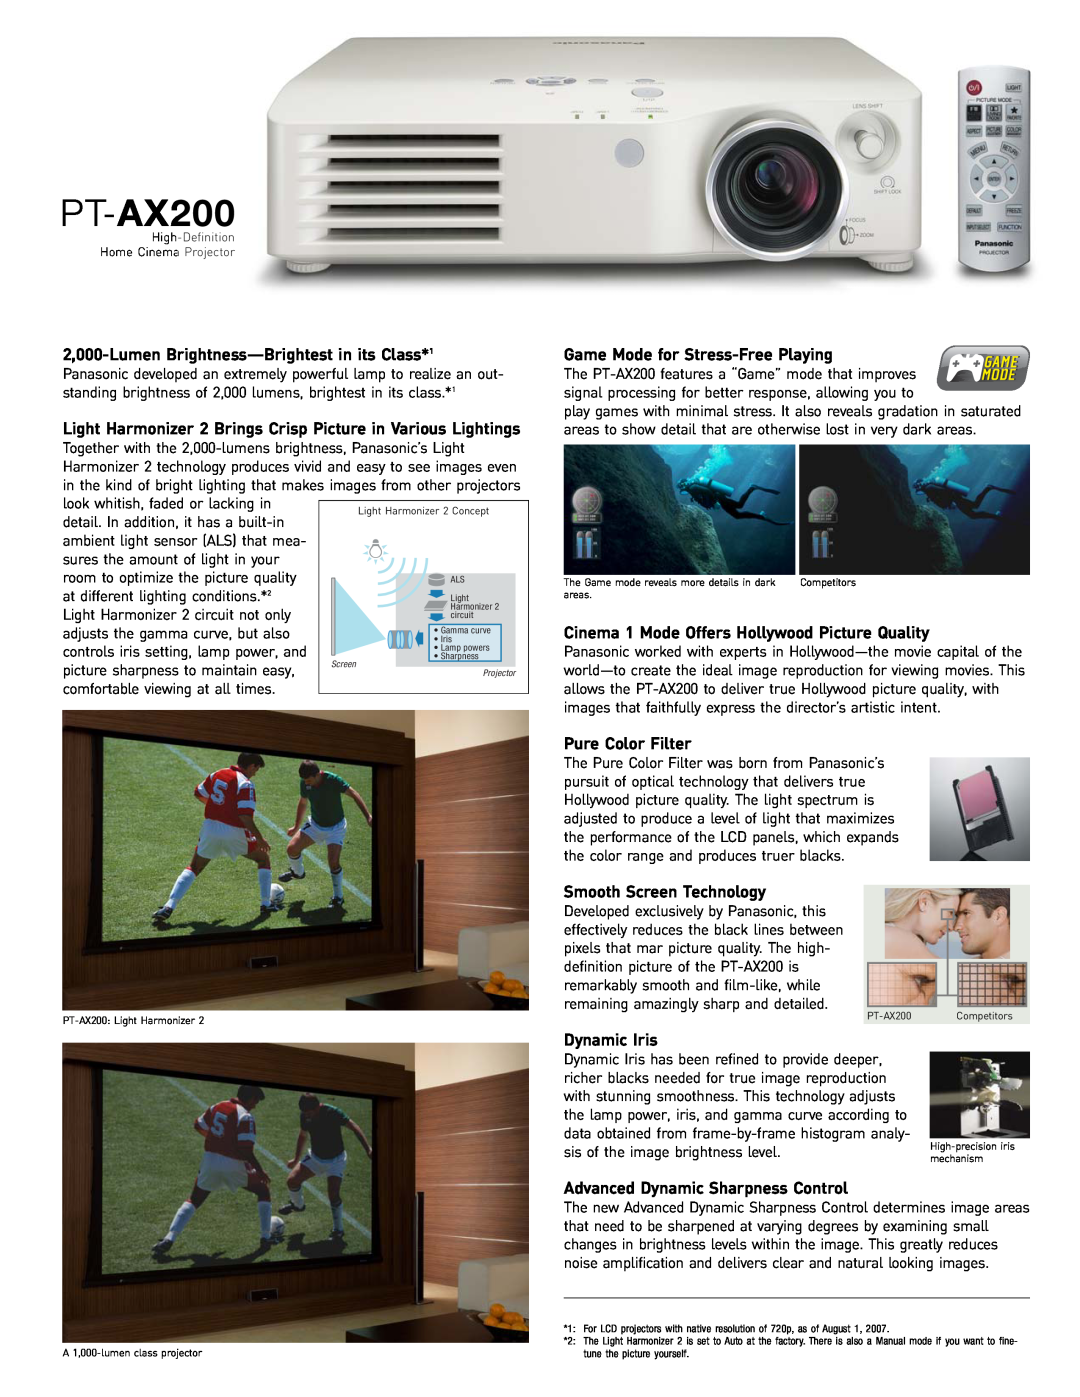 Panasonic 2,000-Lumen Brightness-Brightestin its Class*1, Cinema 1 Mode Offers Hollywood Picture Quality, PT-AX200 